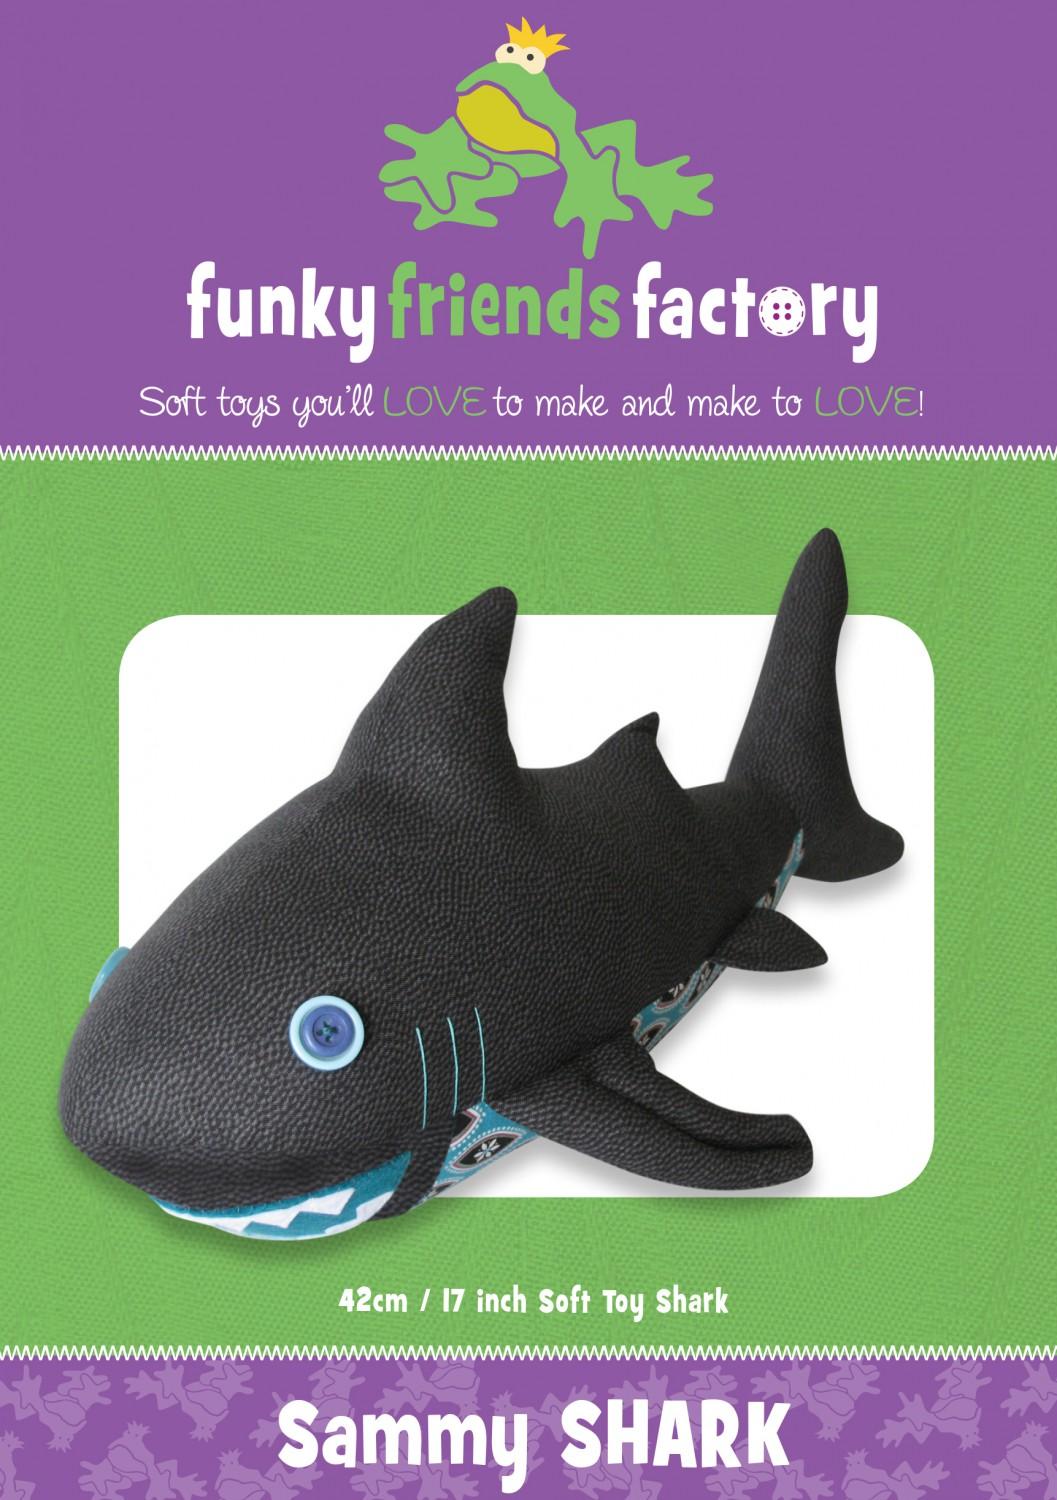 Sammy Shark   Funky Friends Factory